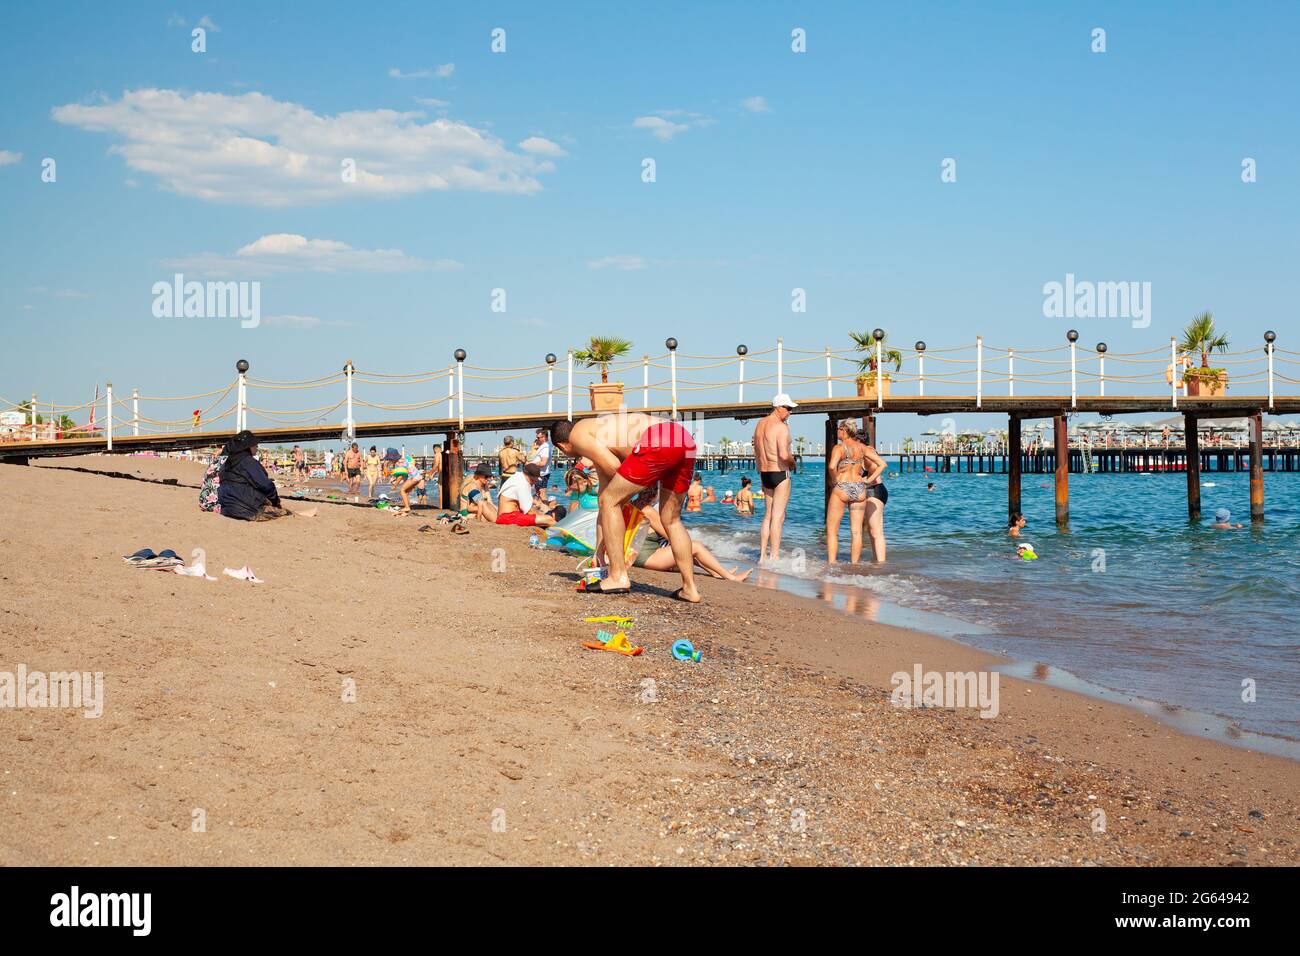 Antalya, Turkey-June 29, 2021: Beach-goers sunbathing, swimming or doing other activites on the beach in summer in Antalya during coronavirus pandemic. Stock Photo